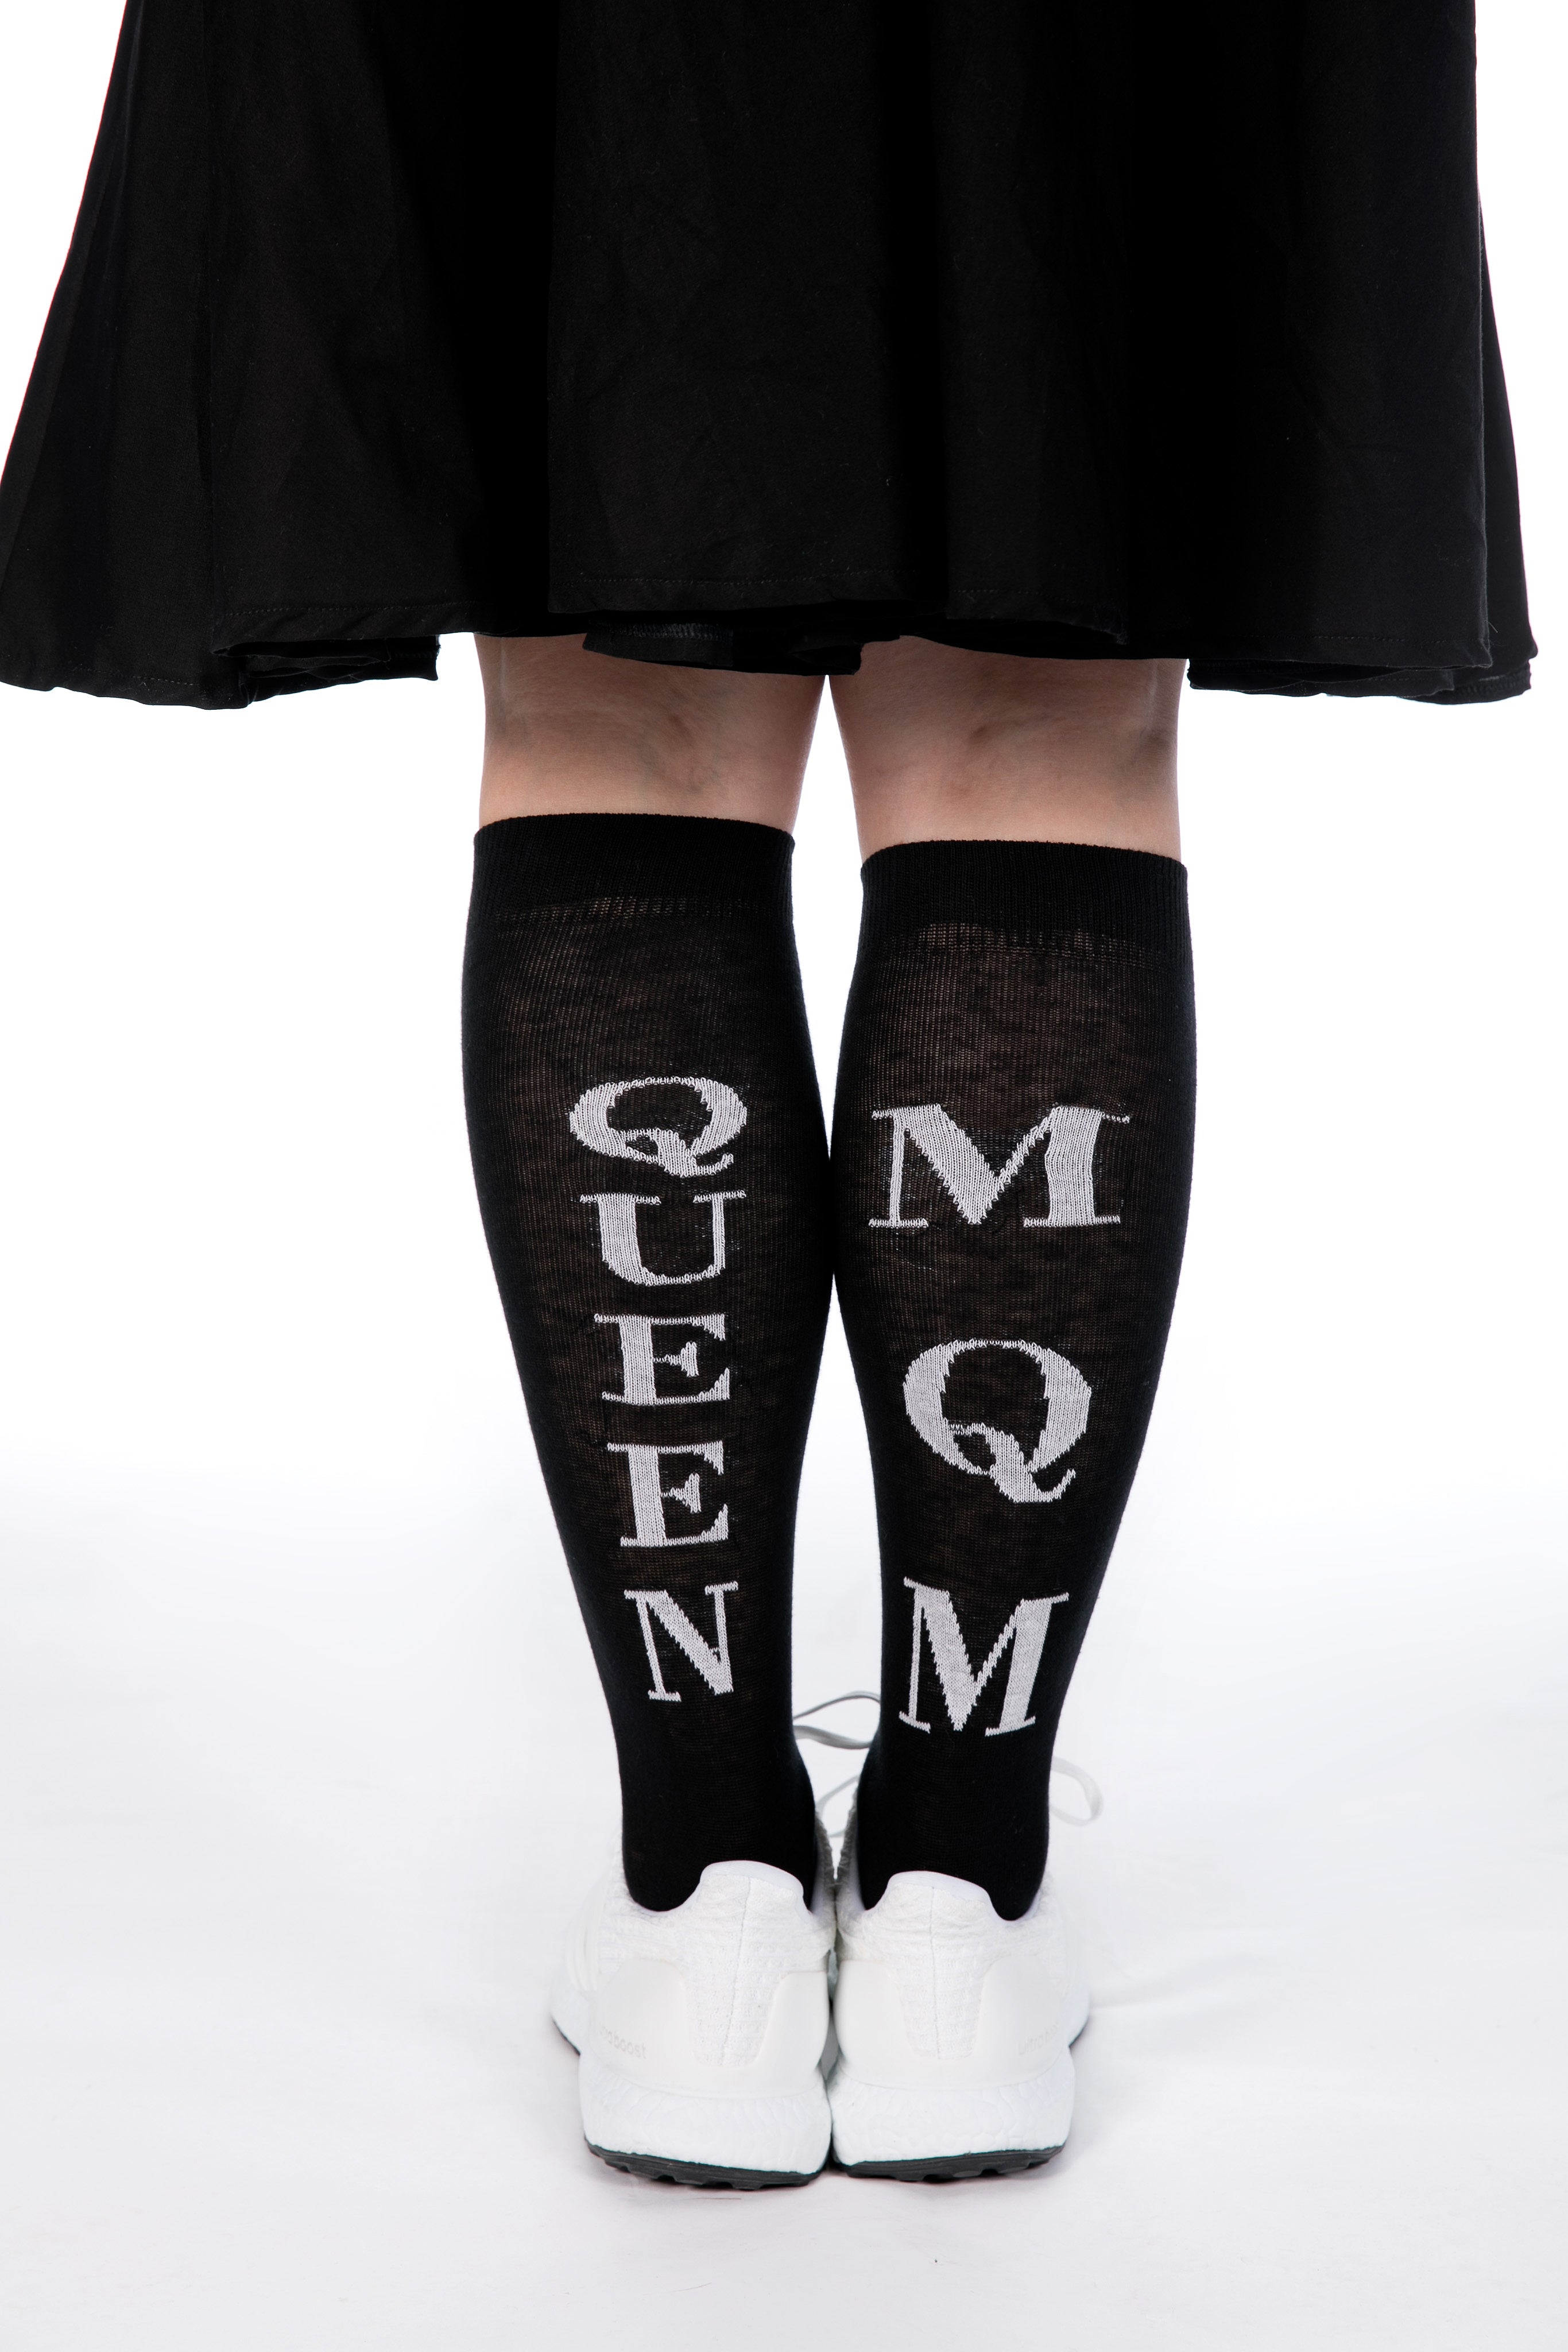 MariaQueenMaria Black Socks